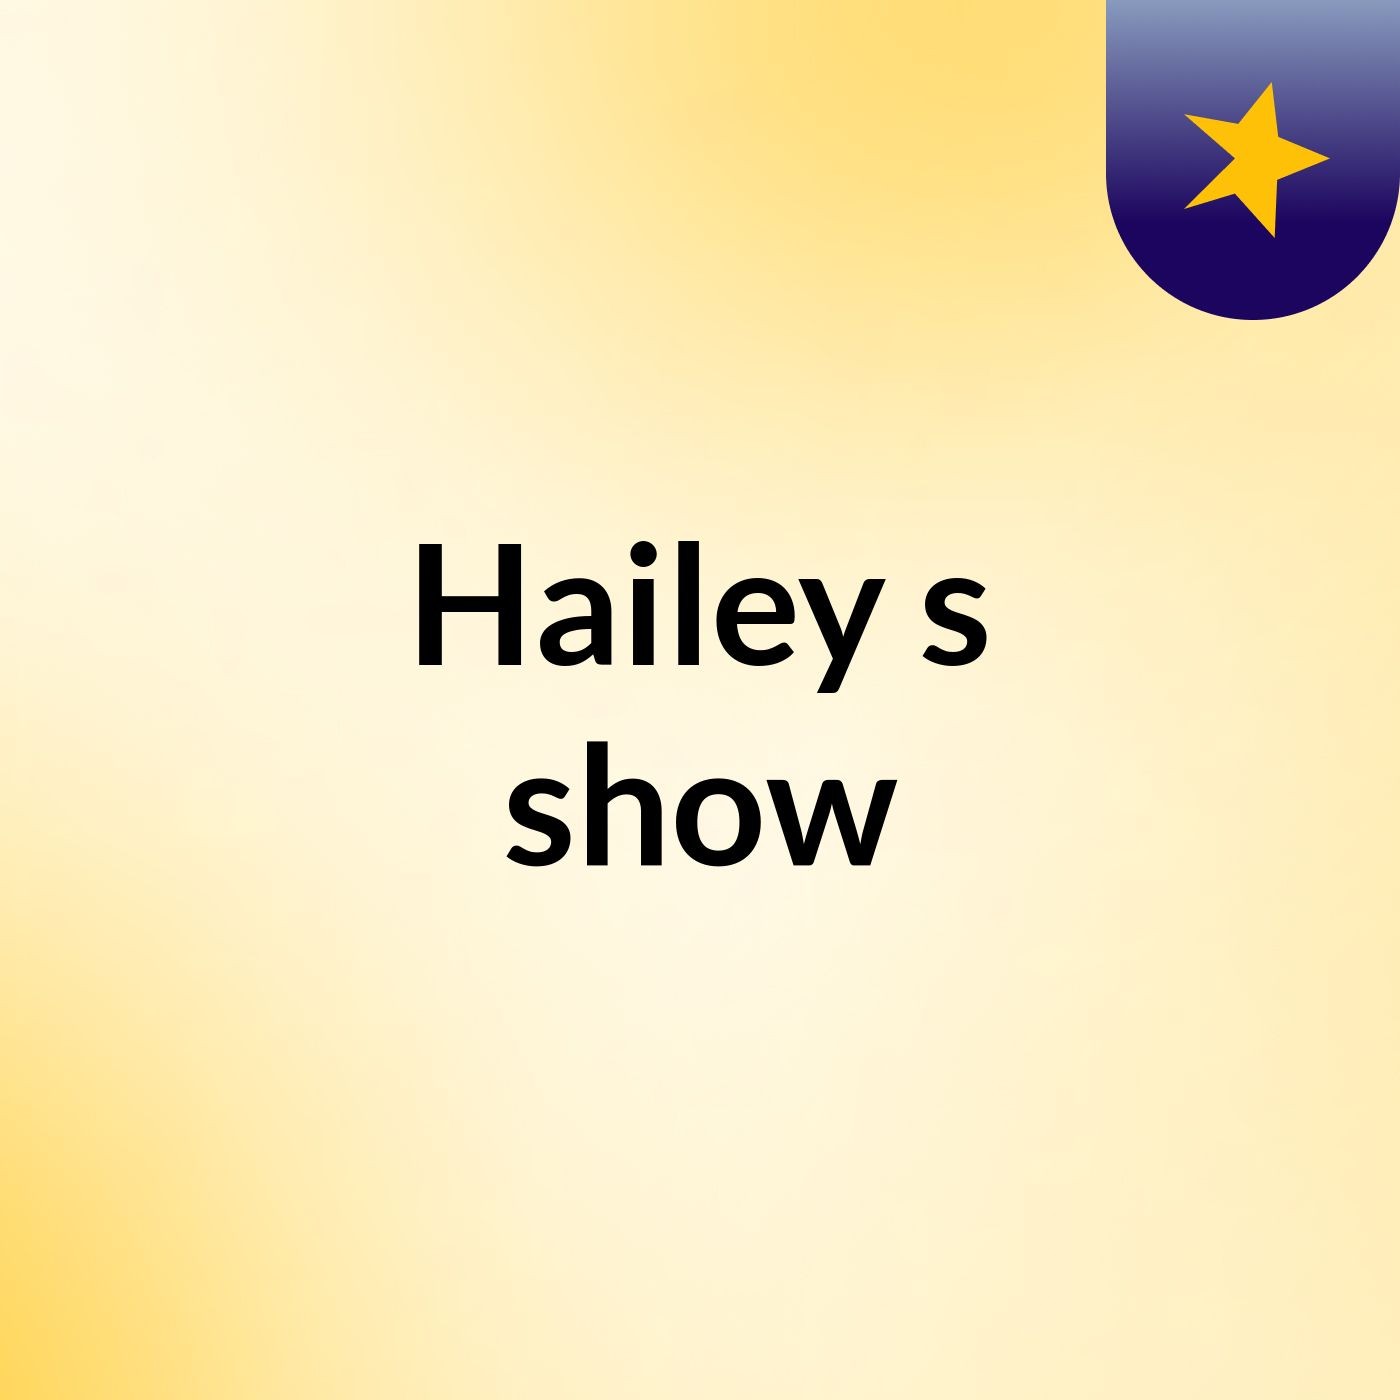 Hailey's show